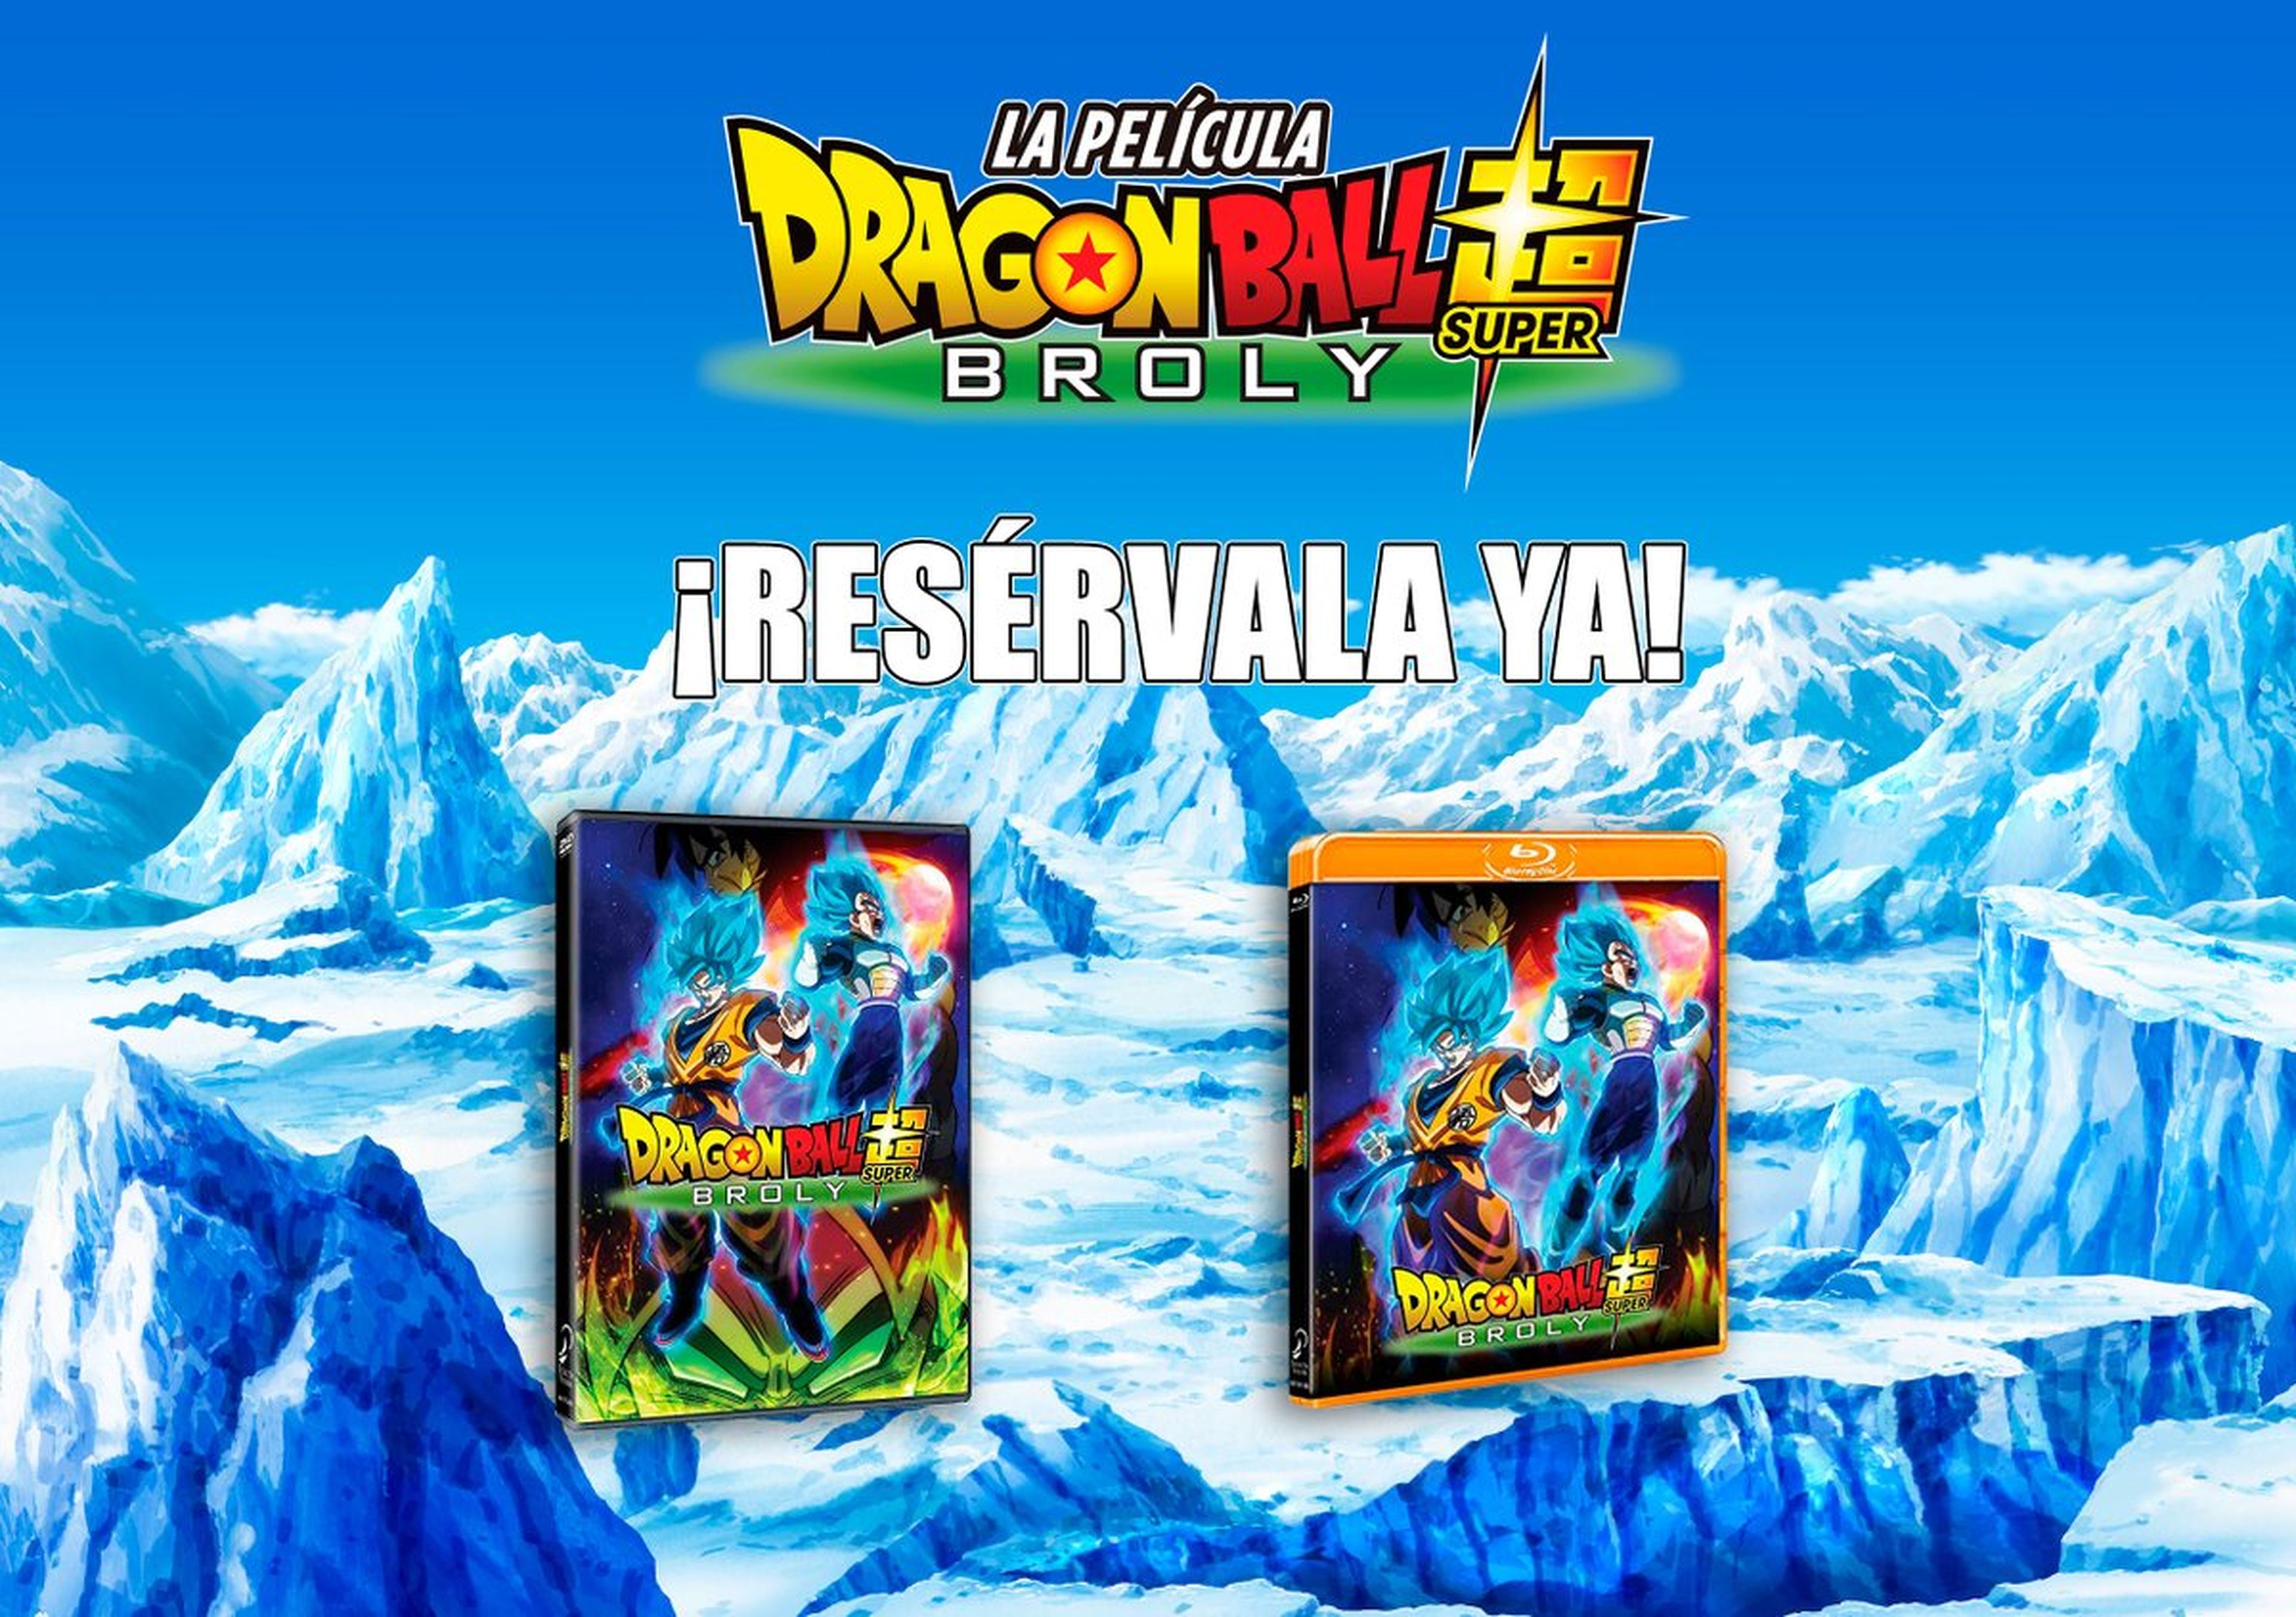 Dragon Ball Super Broly en DVD y Blu-ray